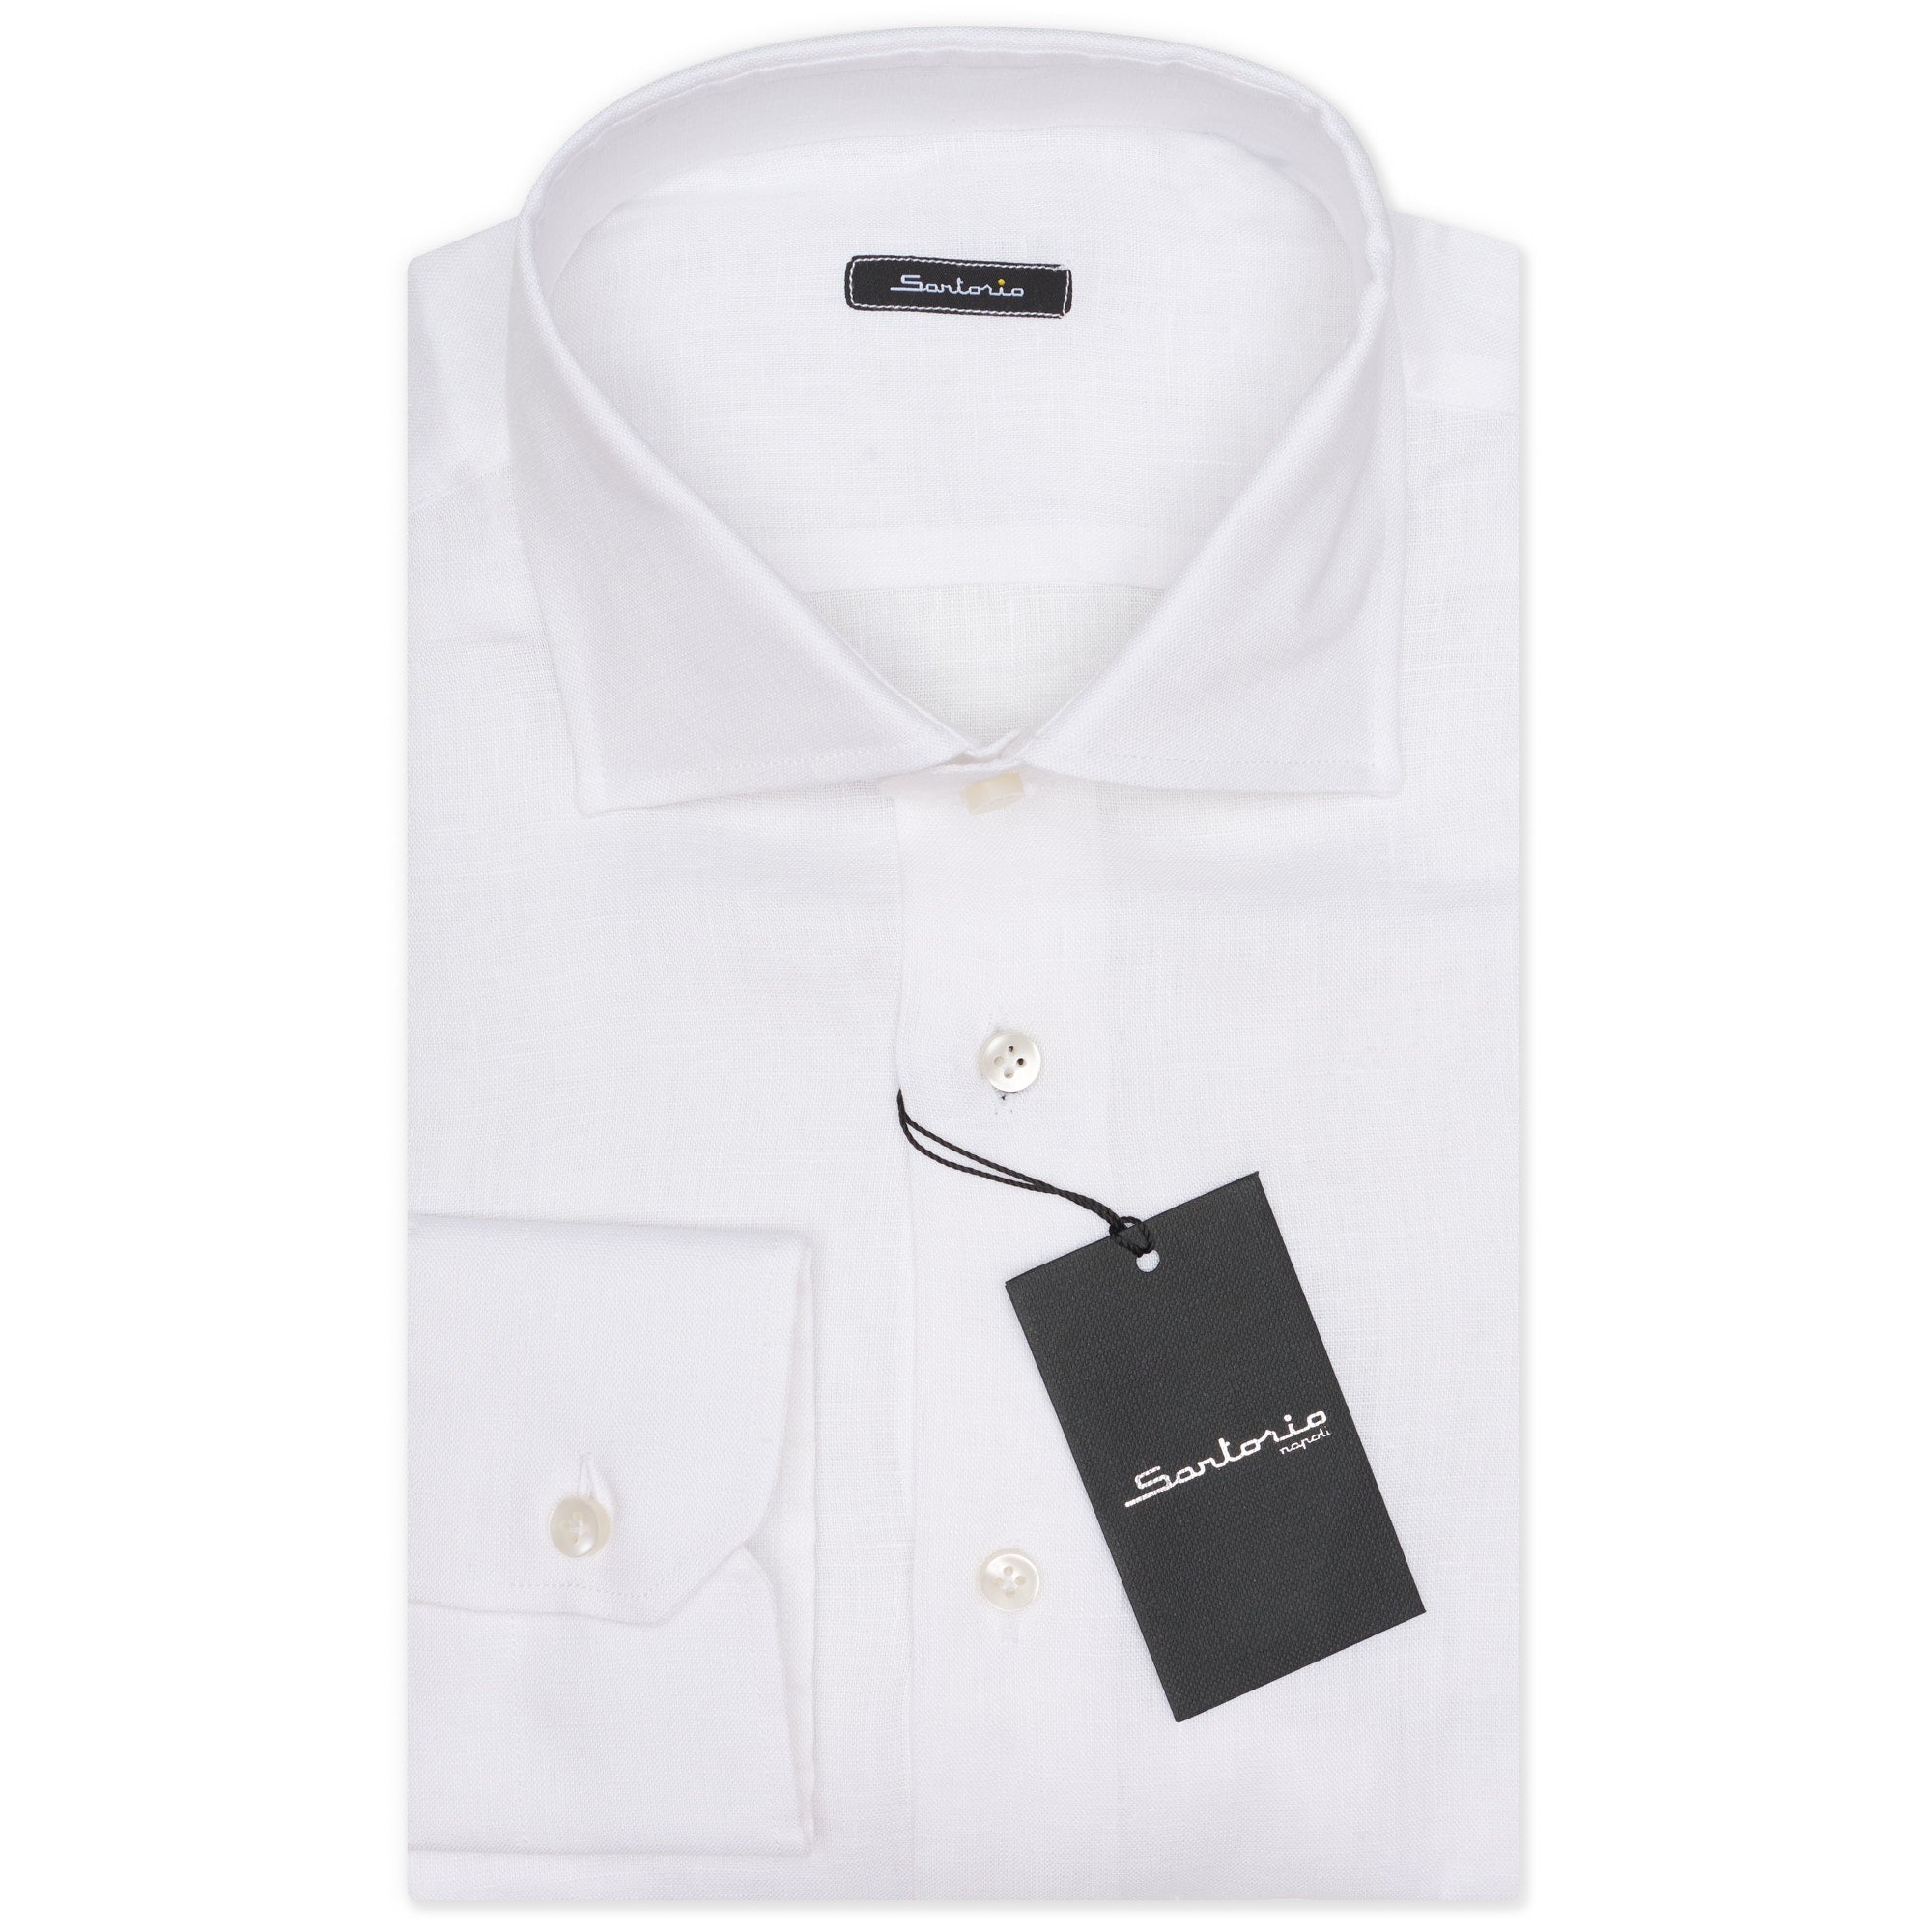 SARTORIO Napoli by KITON White Linen Spread Collar Shirt Slim Fit NEW